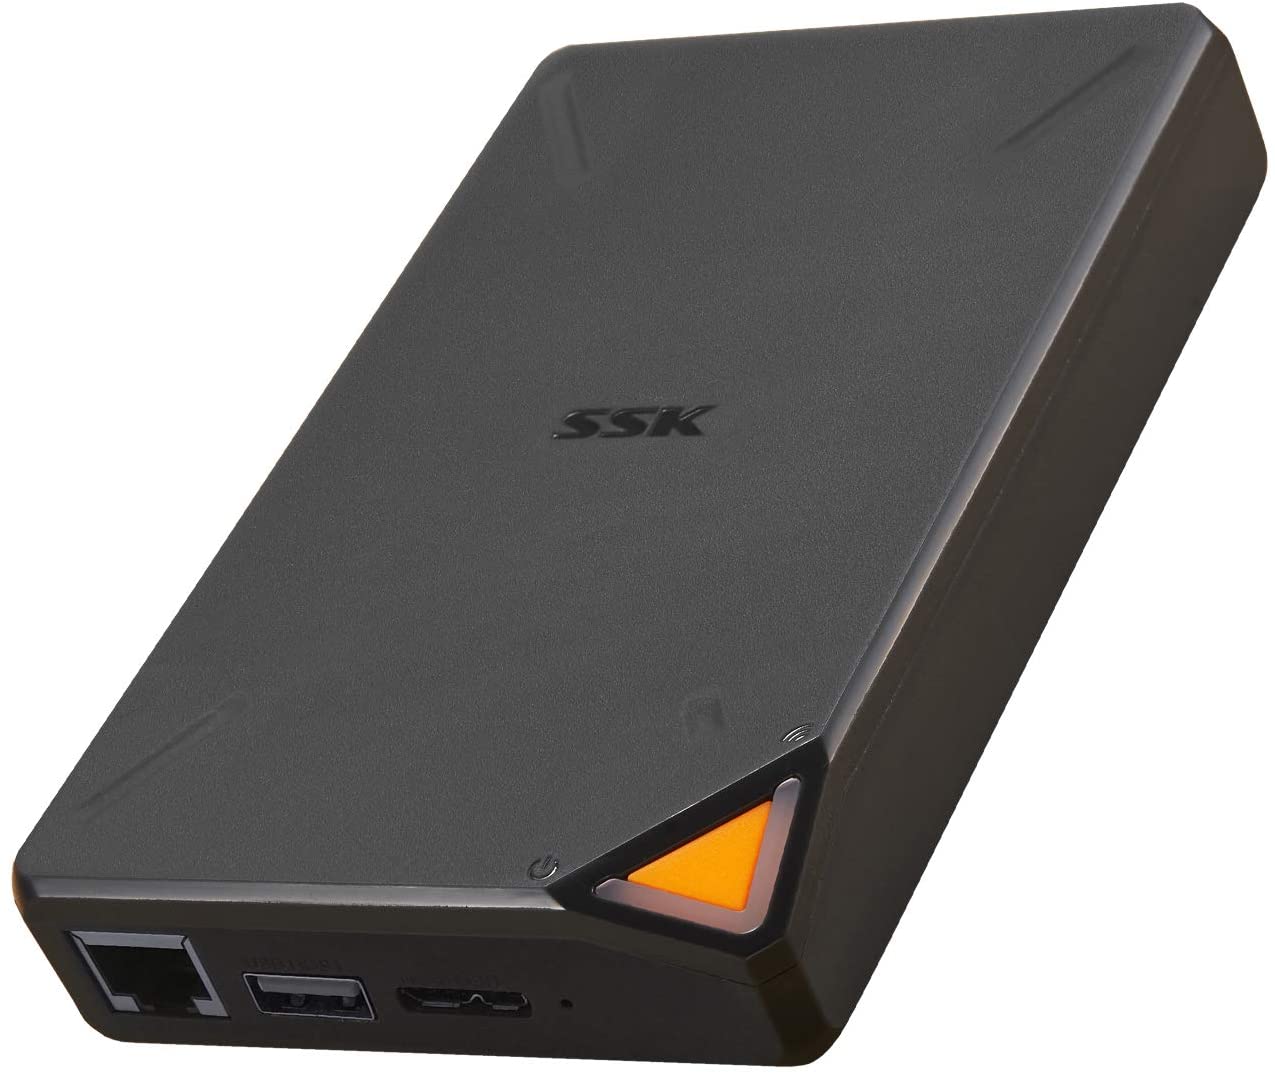 SSK Portable Wireless Hard Drive